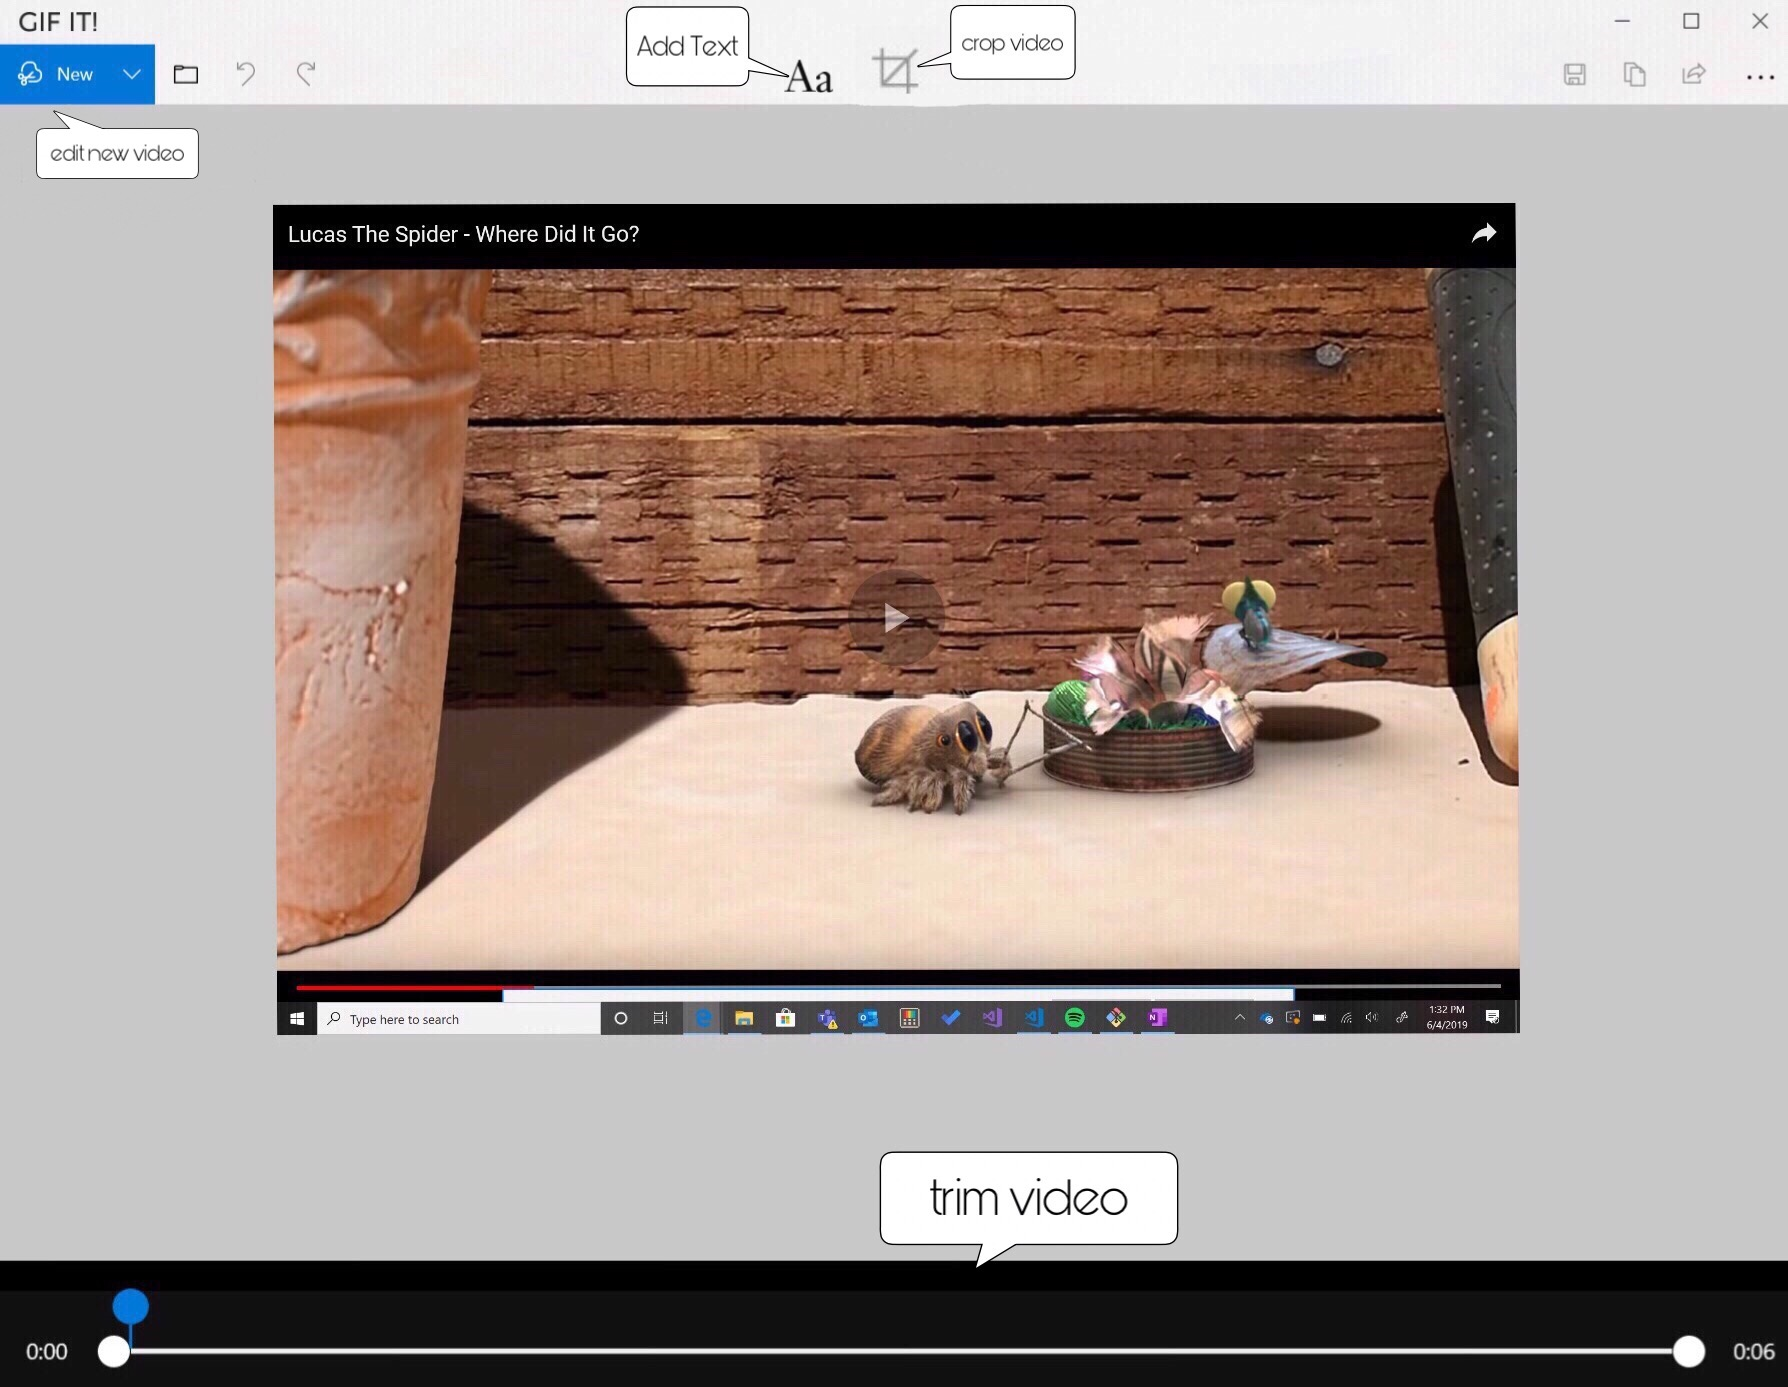 Download Microsoft GIF Animator 1.0 for Windows